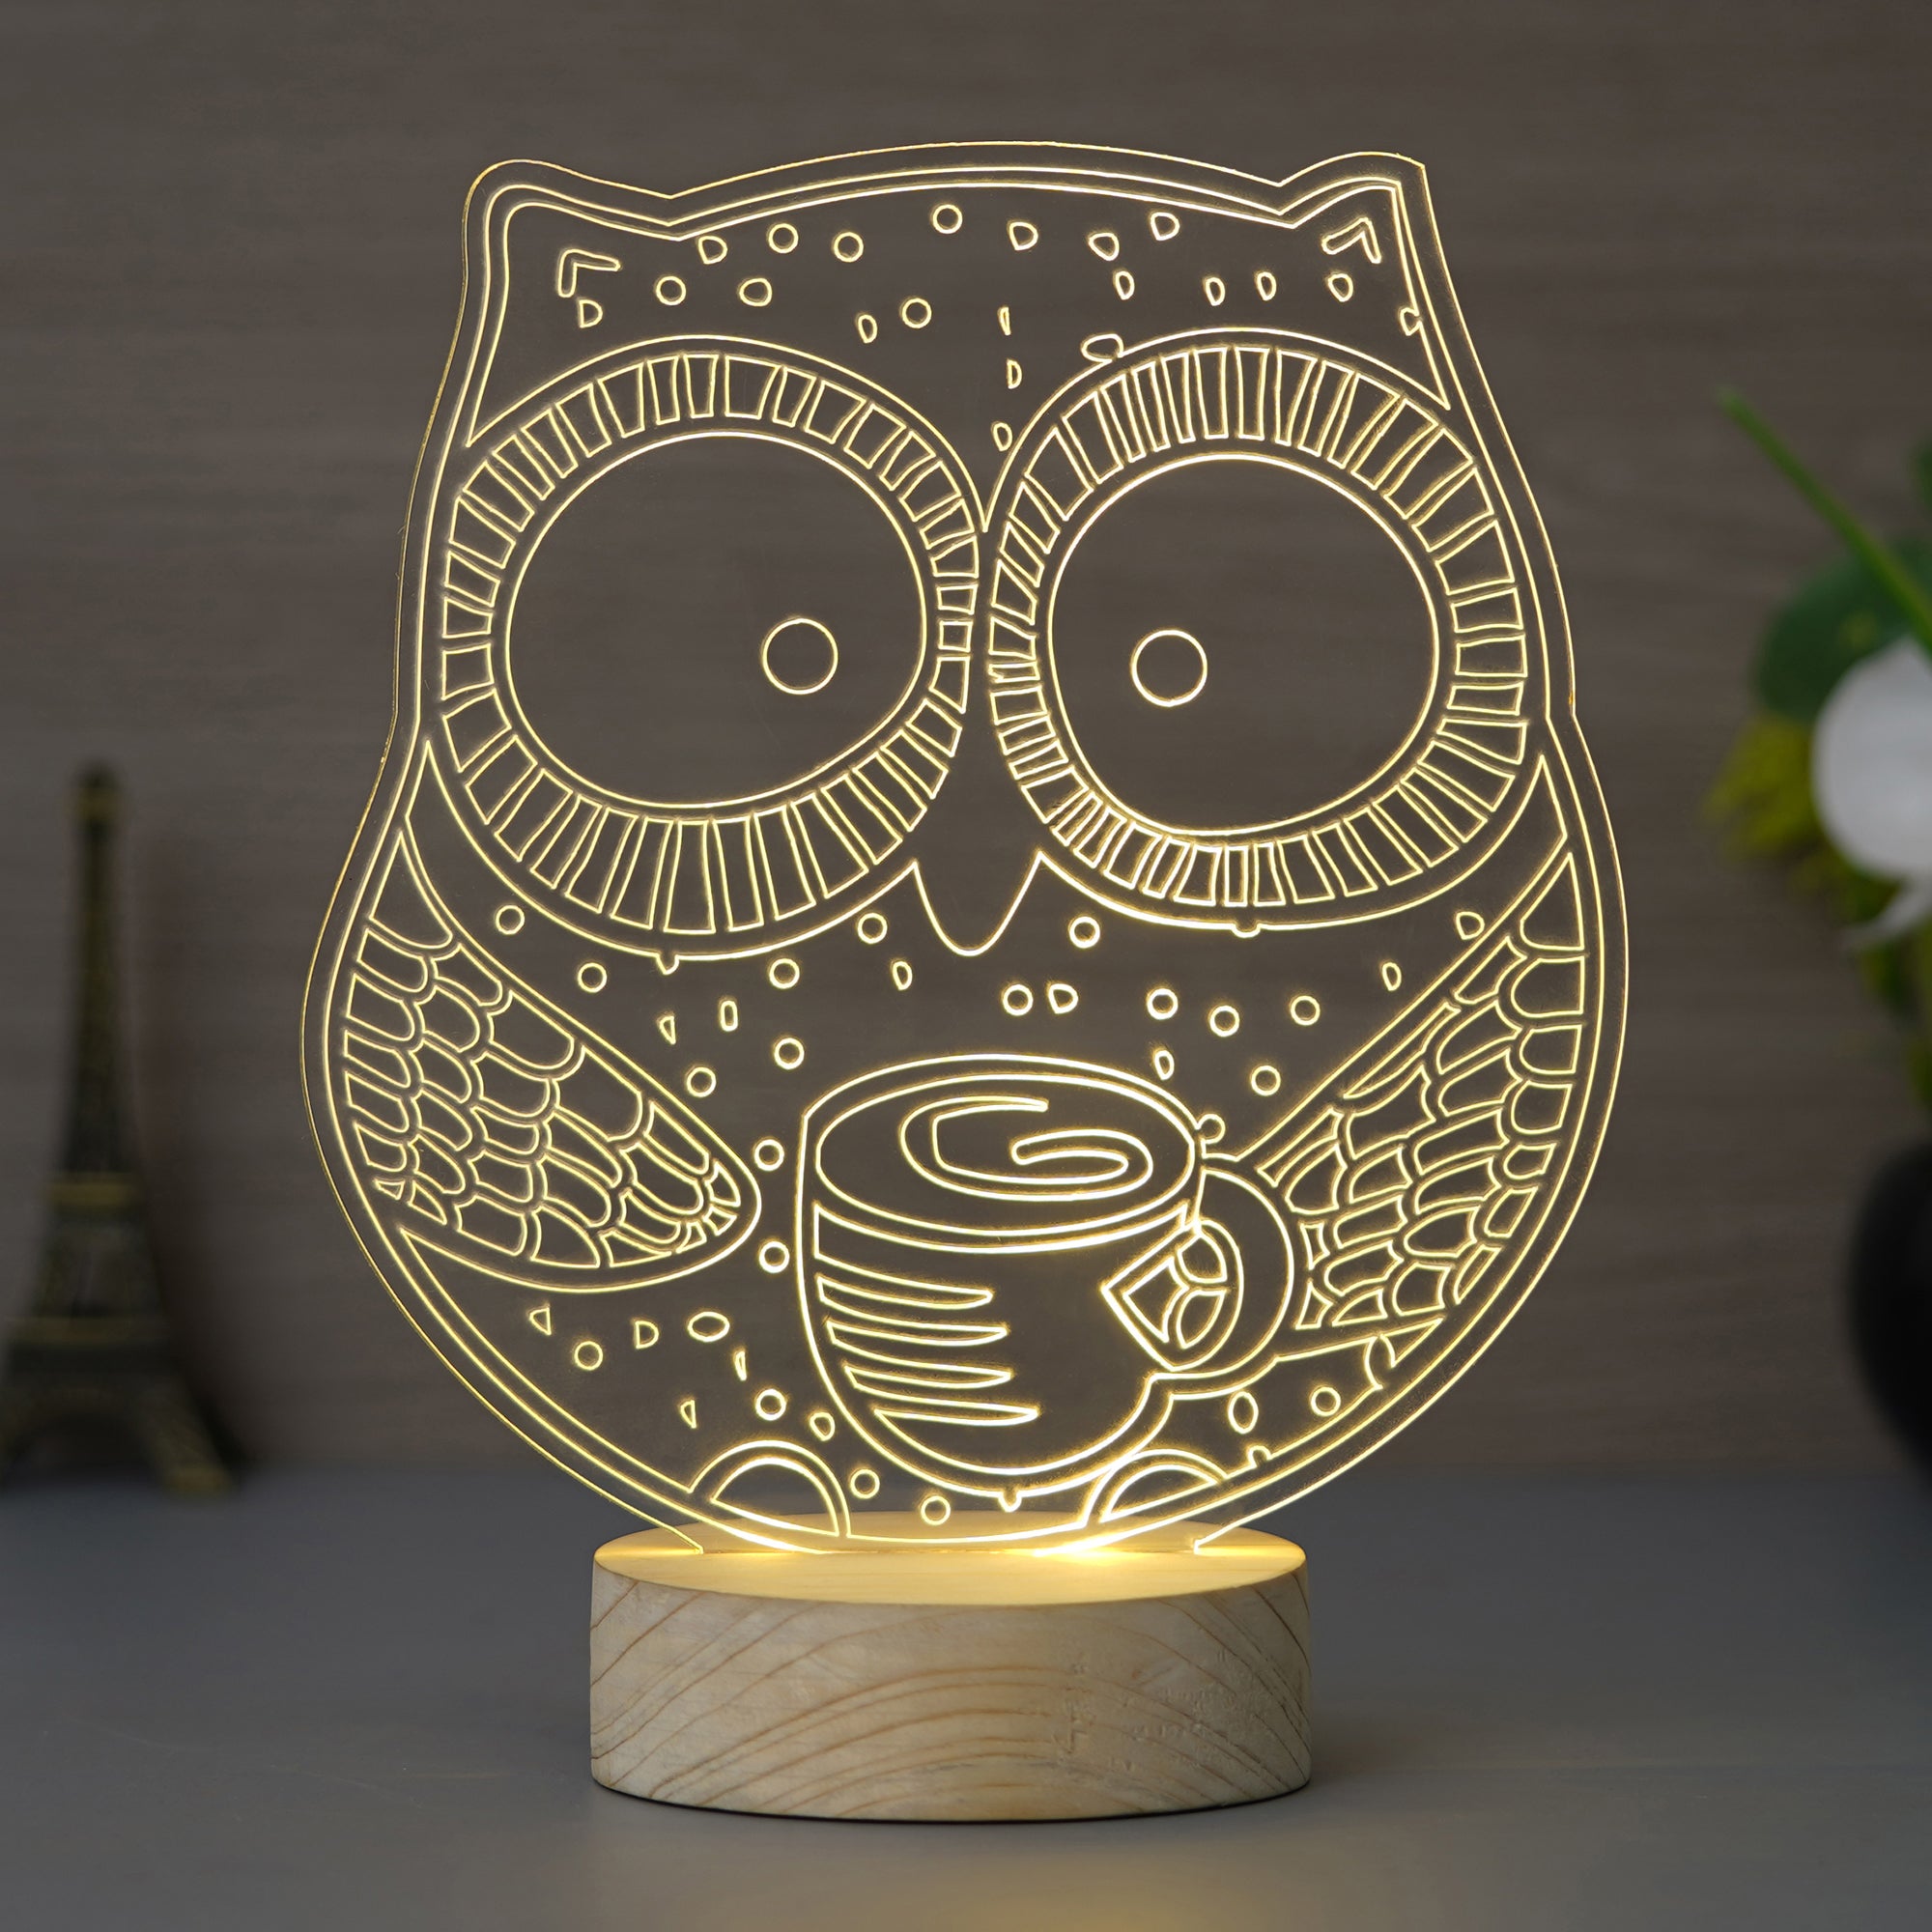 Owl Design Carved on Acrylic & Wood Base Night Lamp